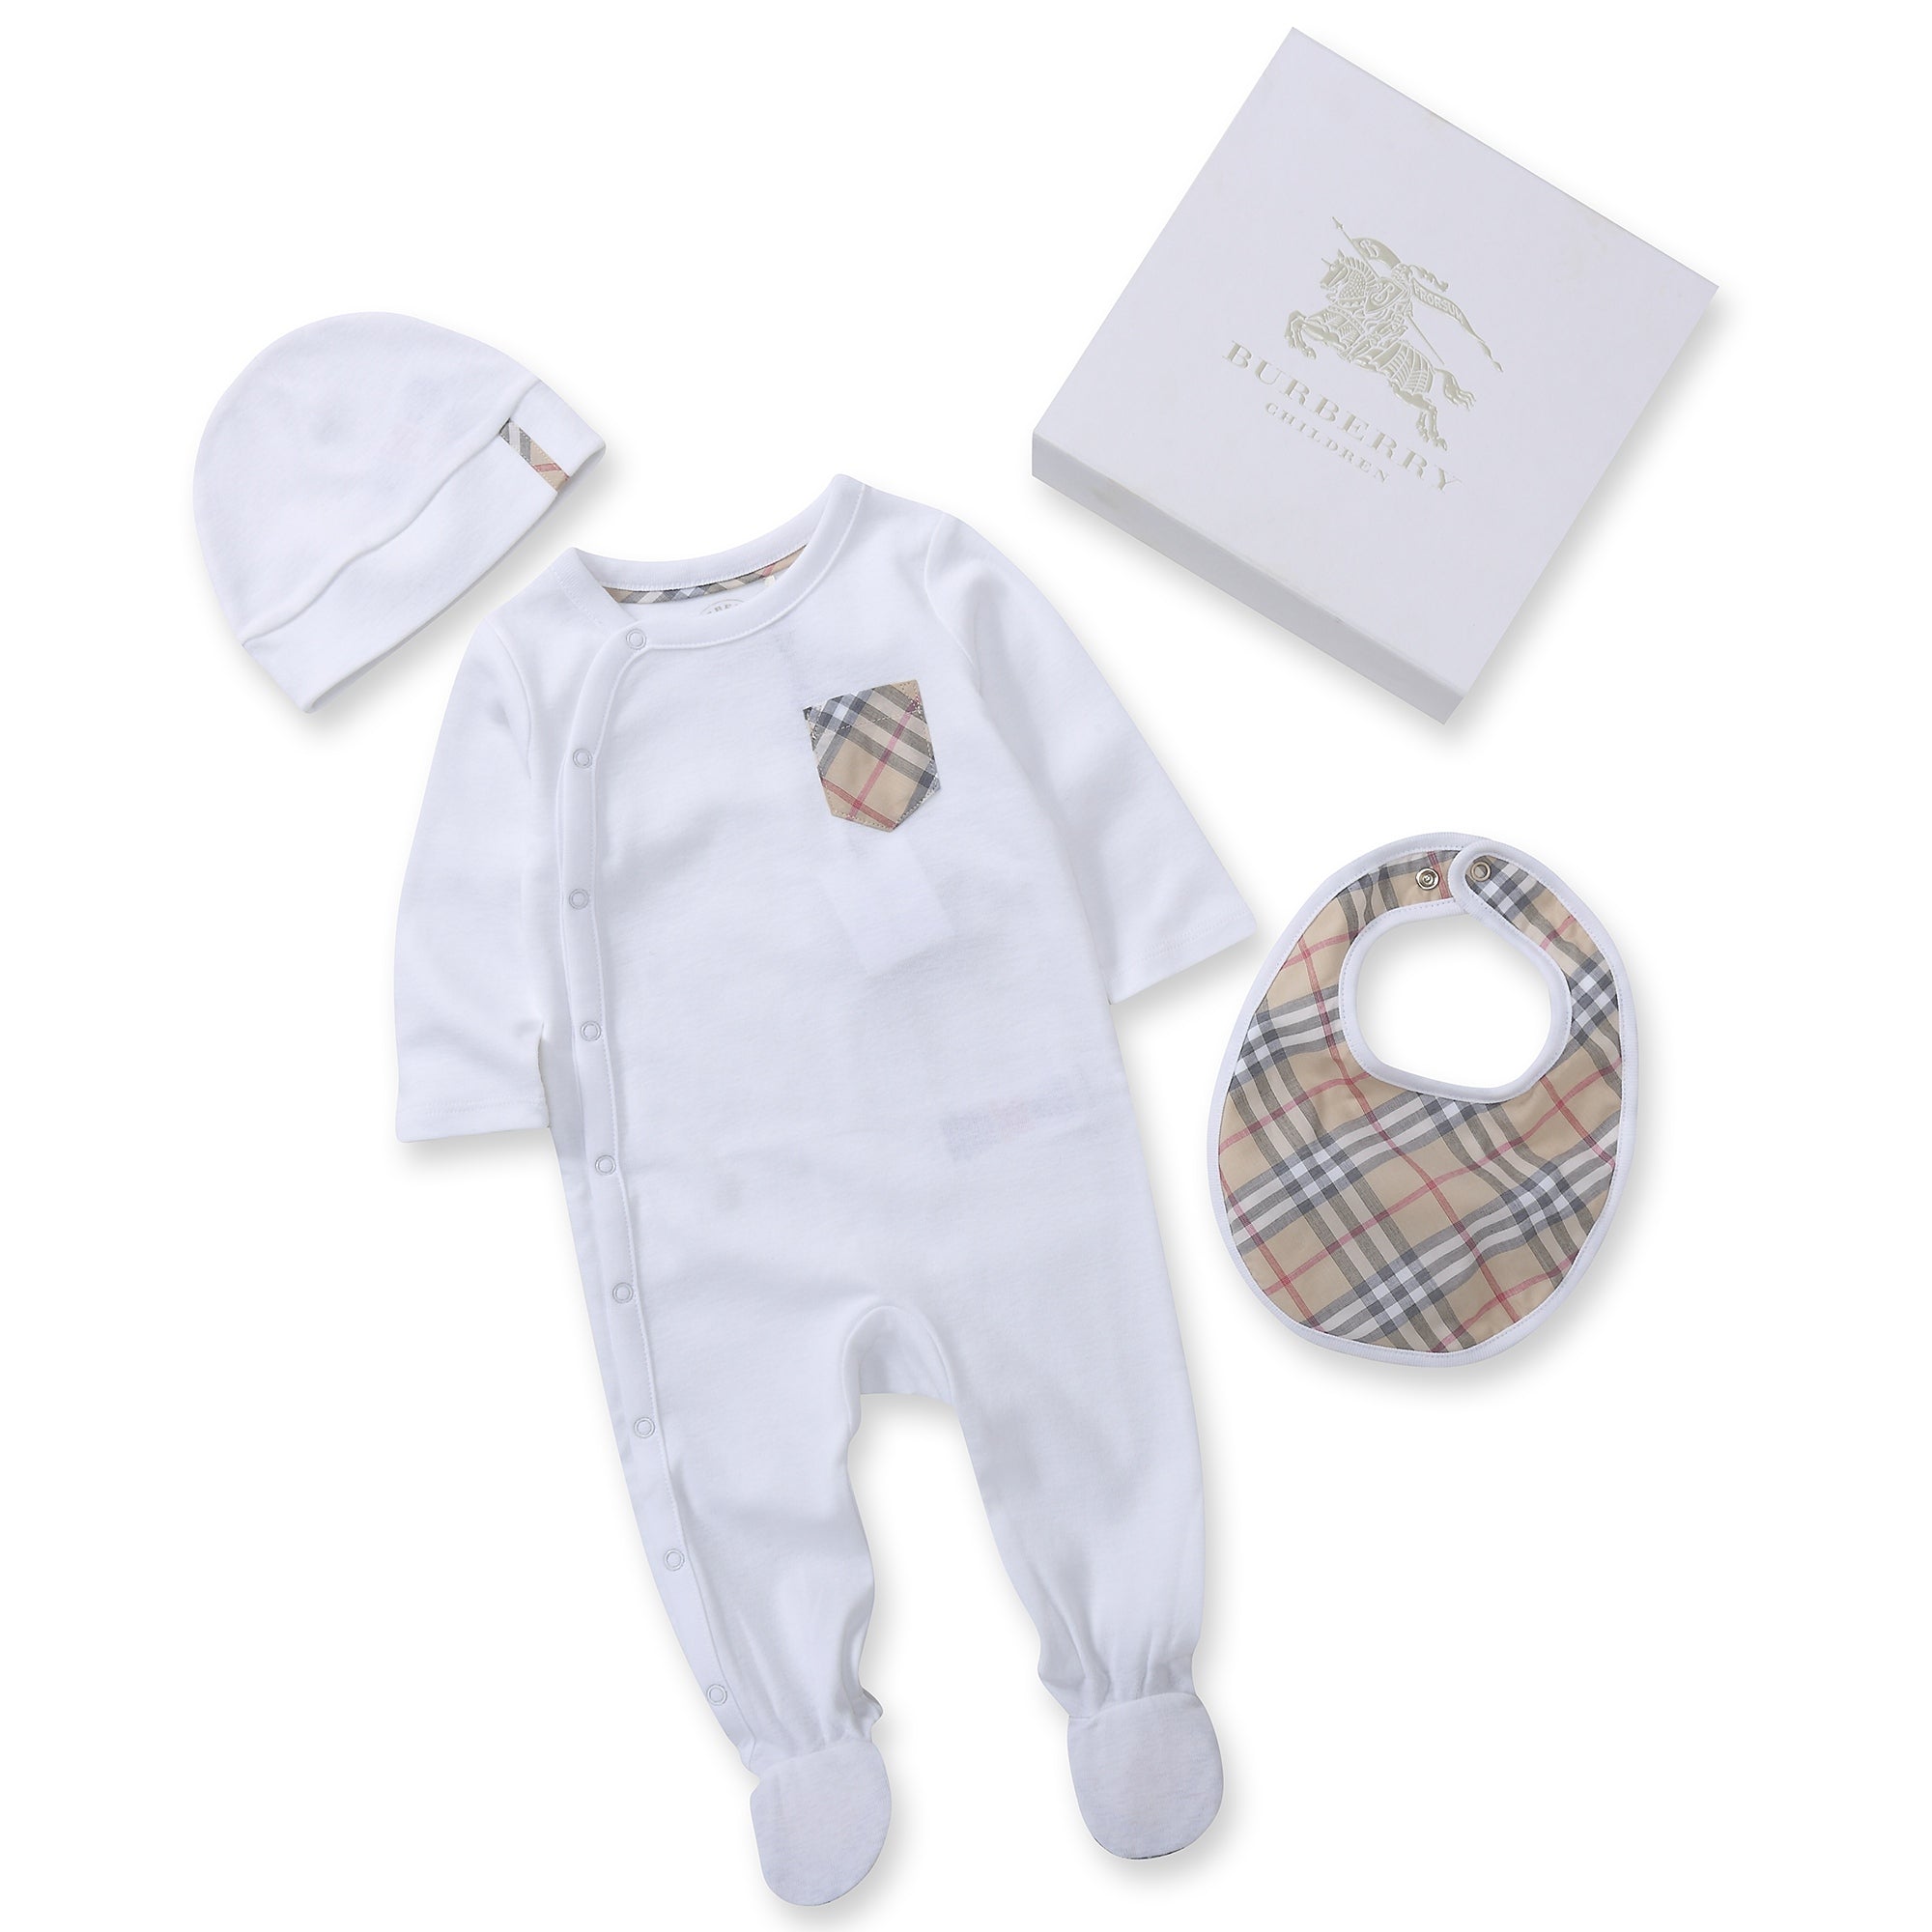 Baby White Cotton Babysuit Set